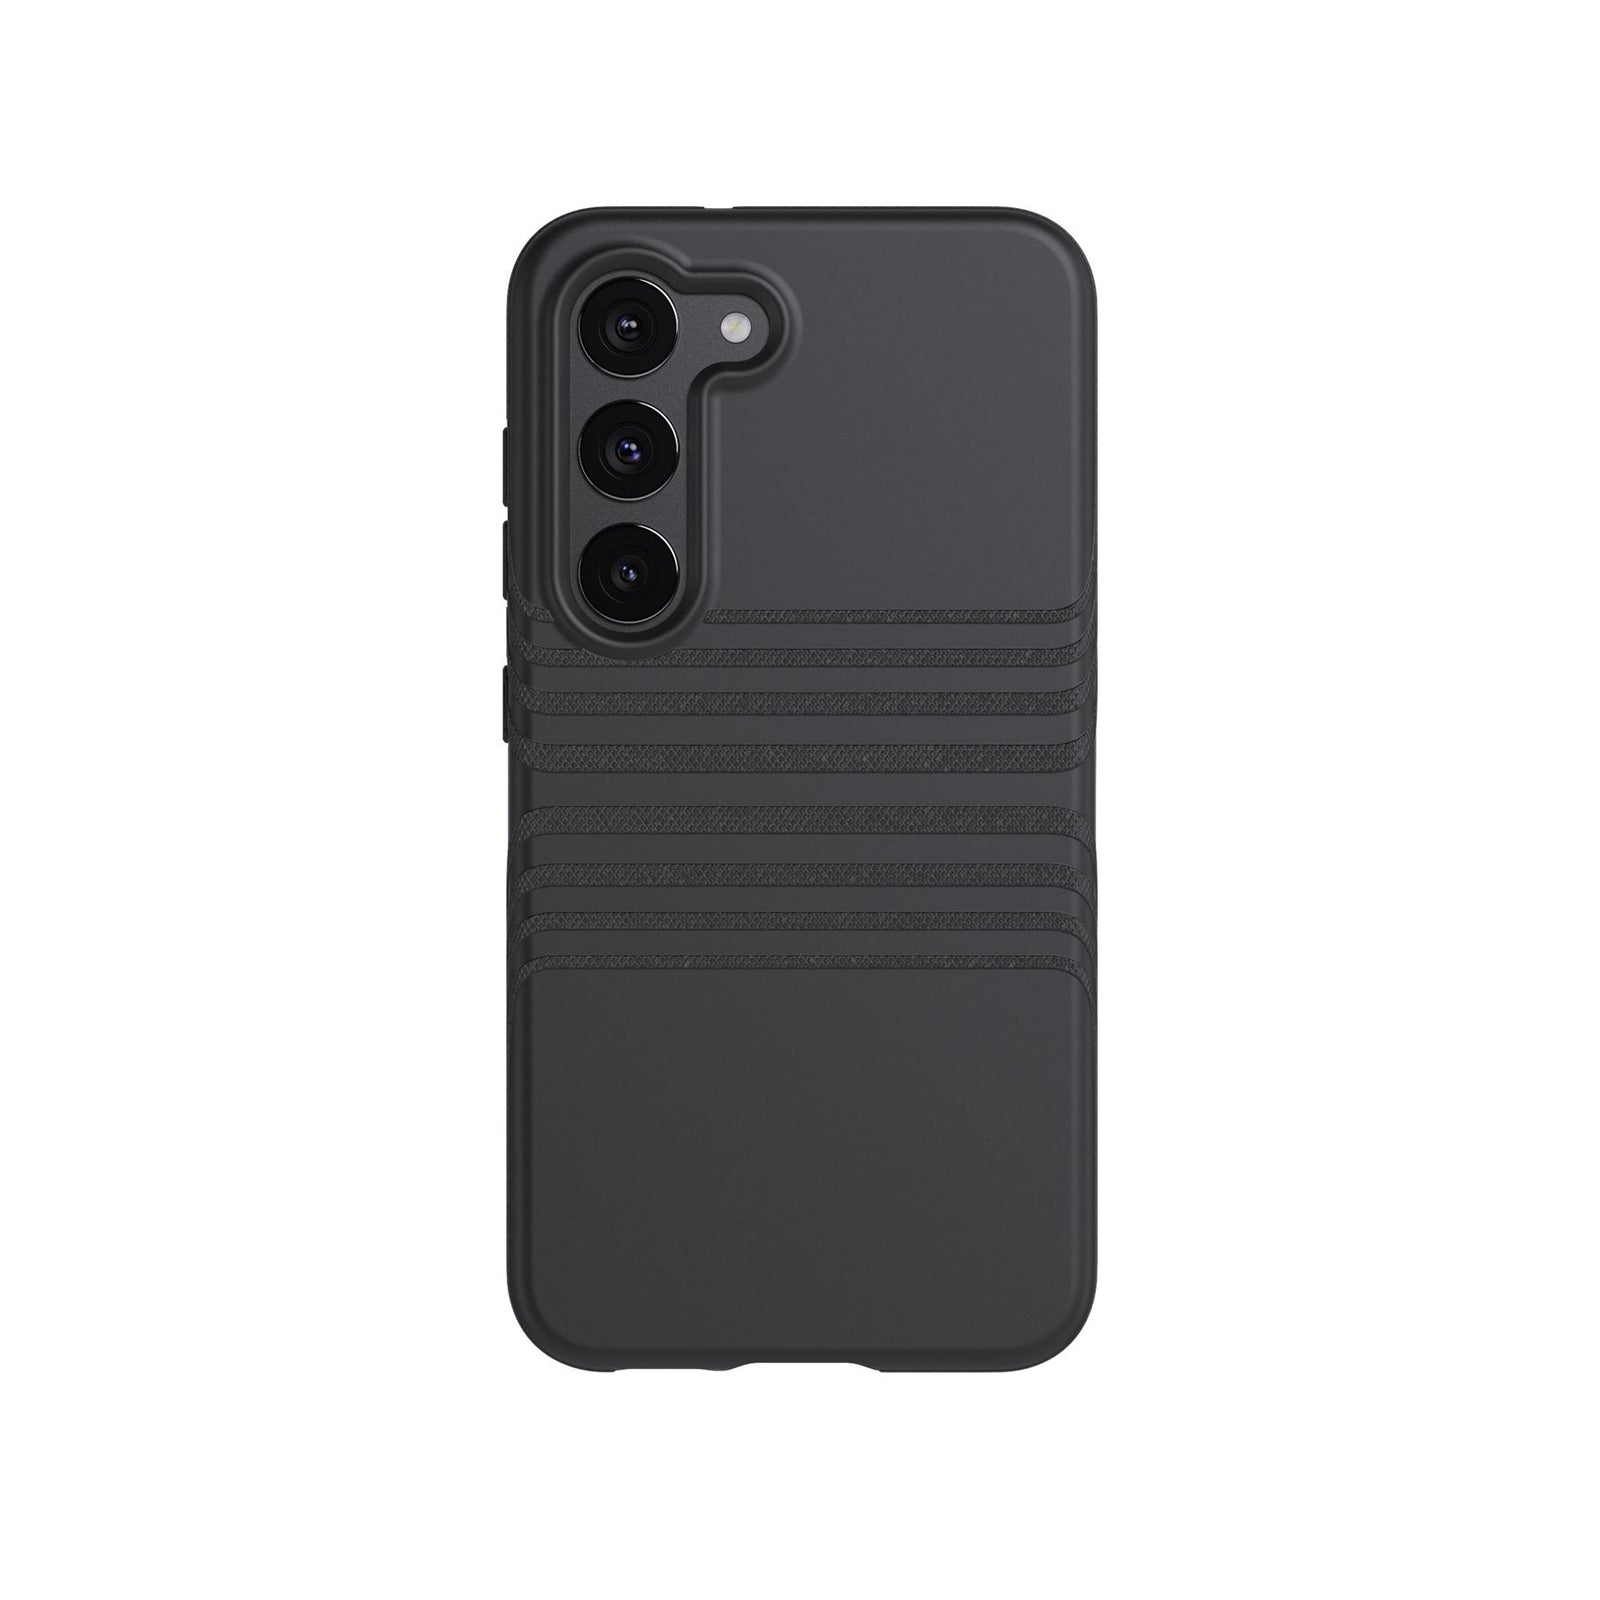  LCEHTOGYE Case for Oukitel WP32, Slim Shock-Absorption  Anti-Scratch Black Soft TPU Bumper Protective Phone Case Cover for Oukitel  WP32 (5,93) - KE113 : Cell Phones & Accessories